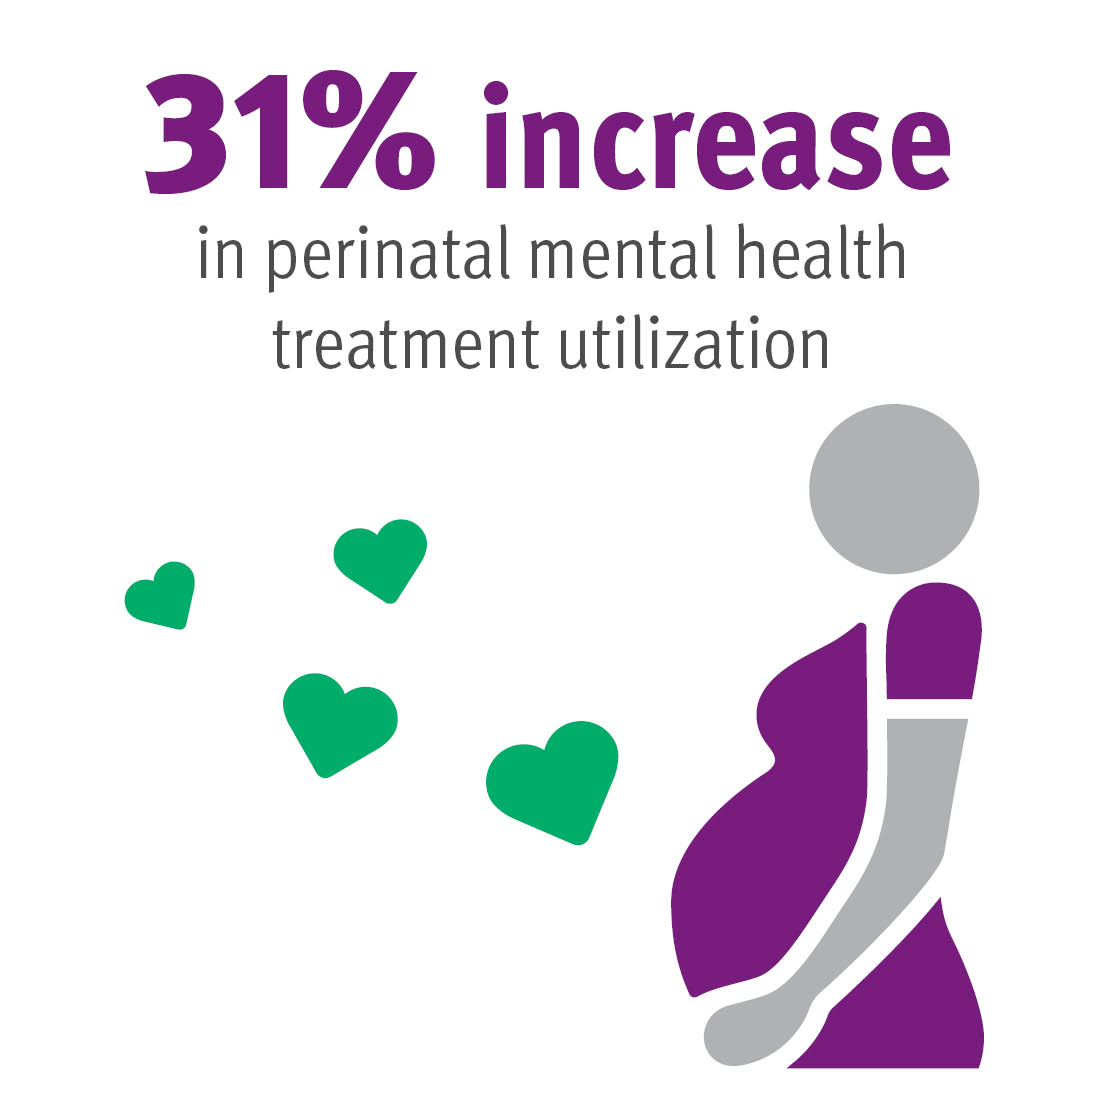 Increase in Perinatal Mental Health Treatment